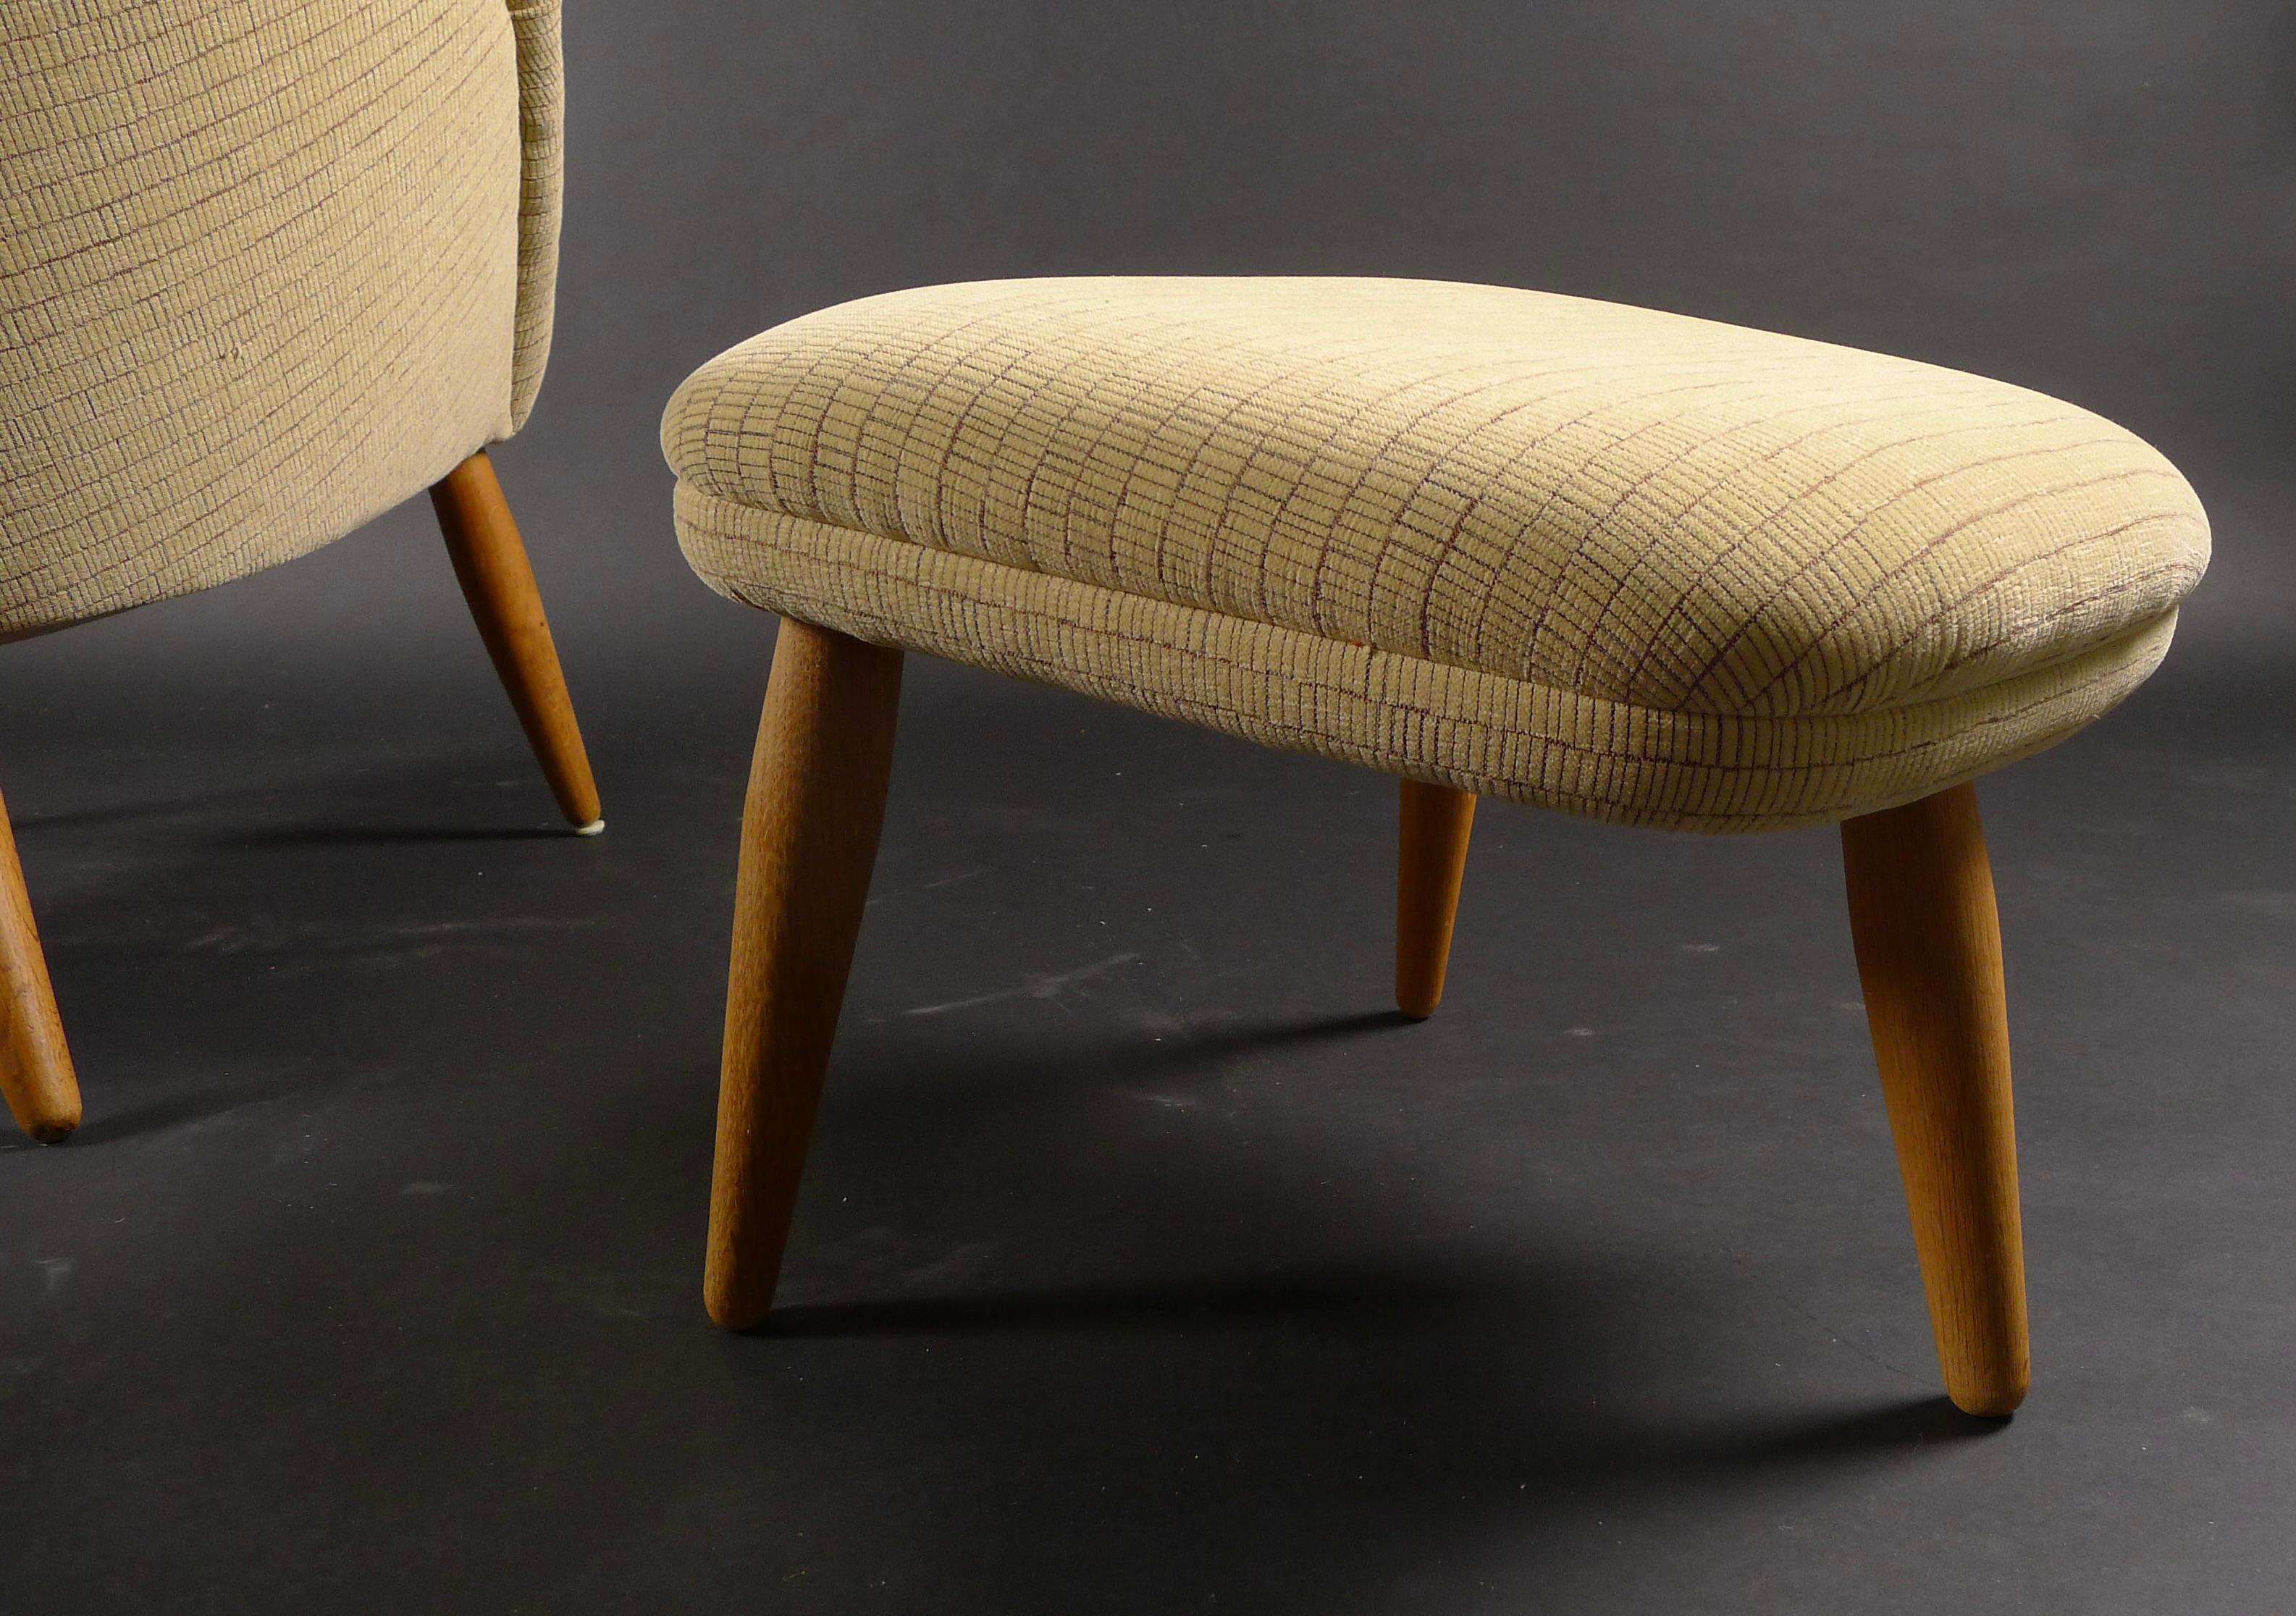 Fabric Arnold Madsen, Oda Lounge Chair and Ottoman, Designed 1957, Denmark